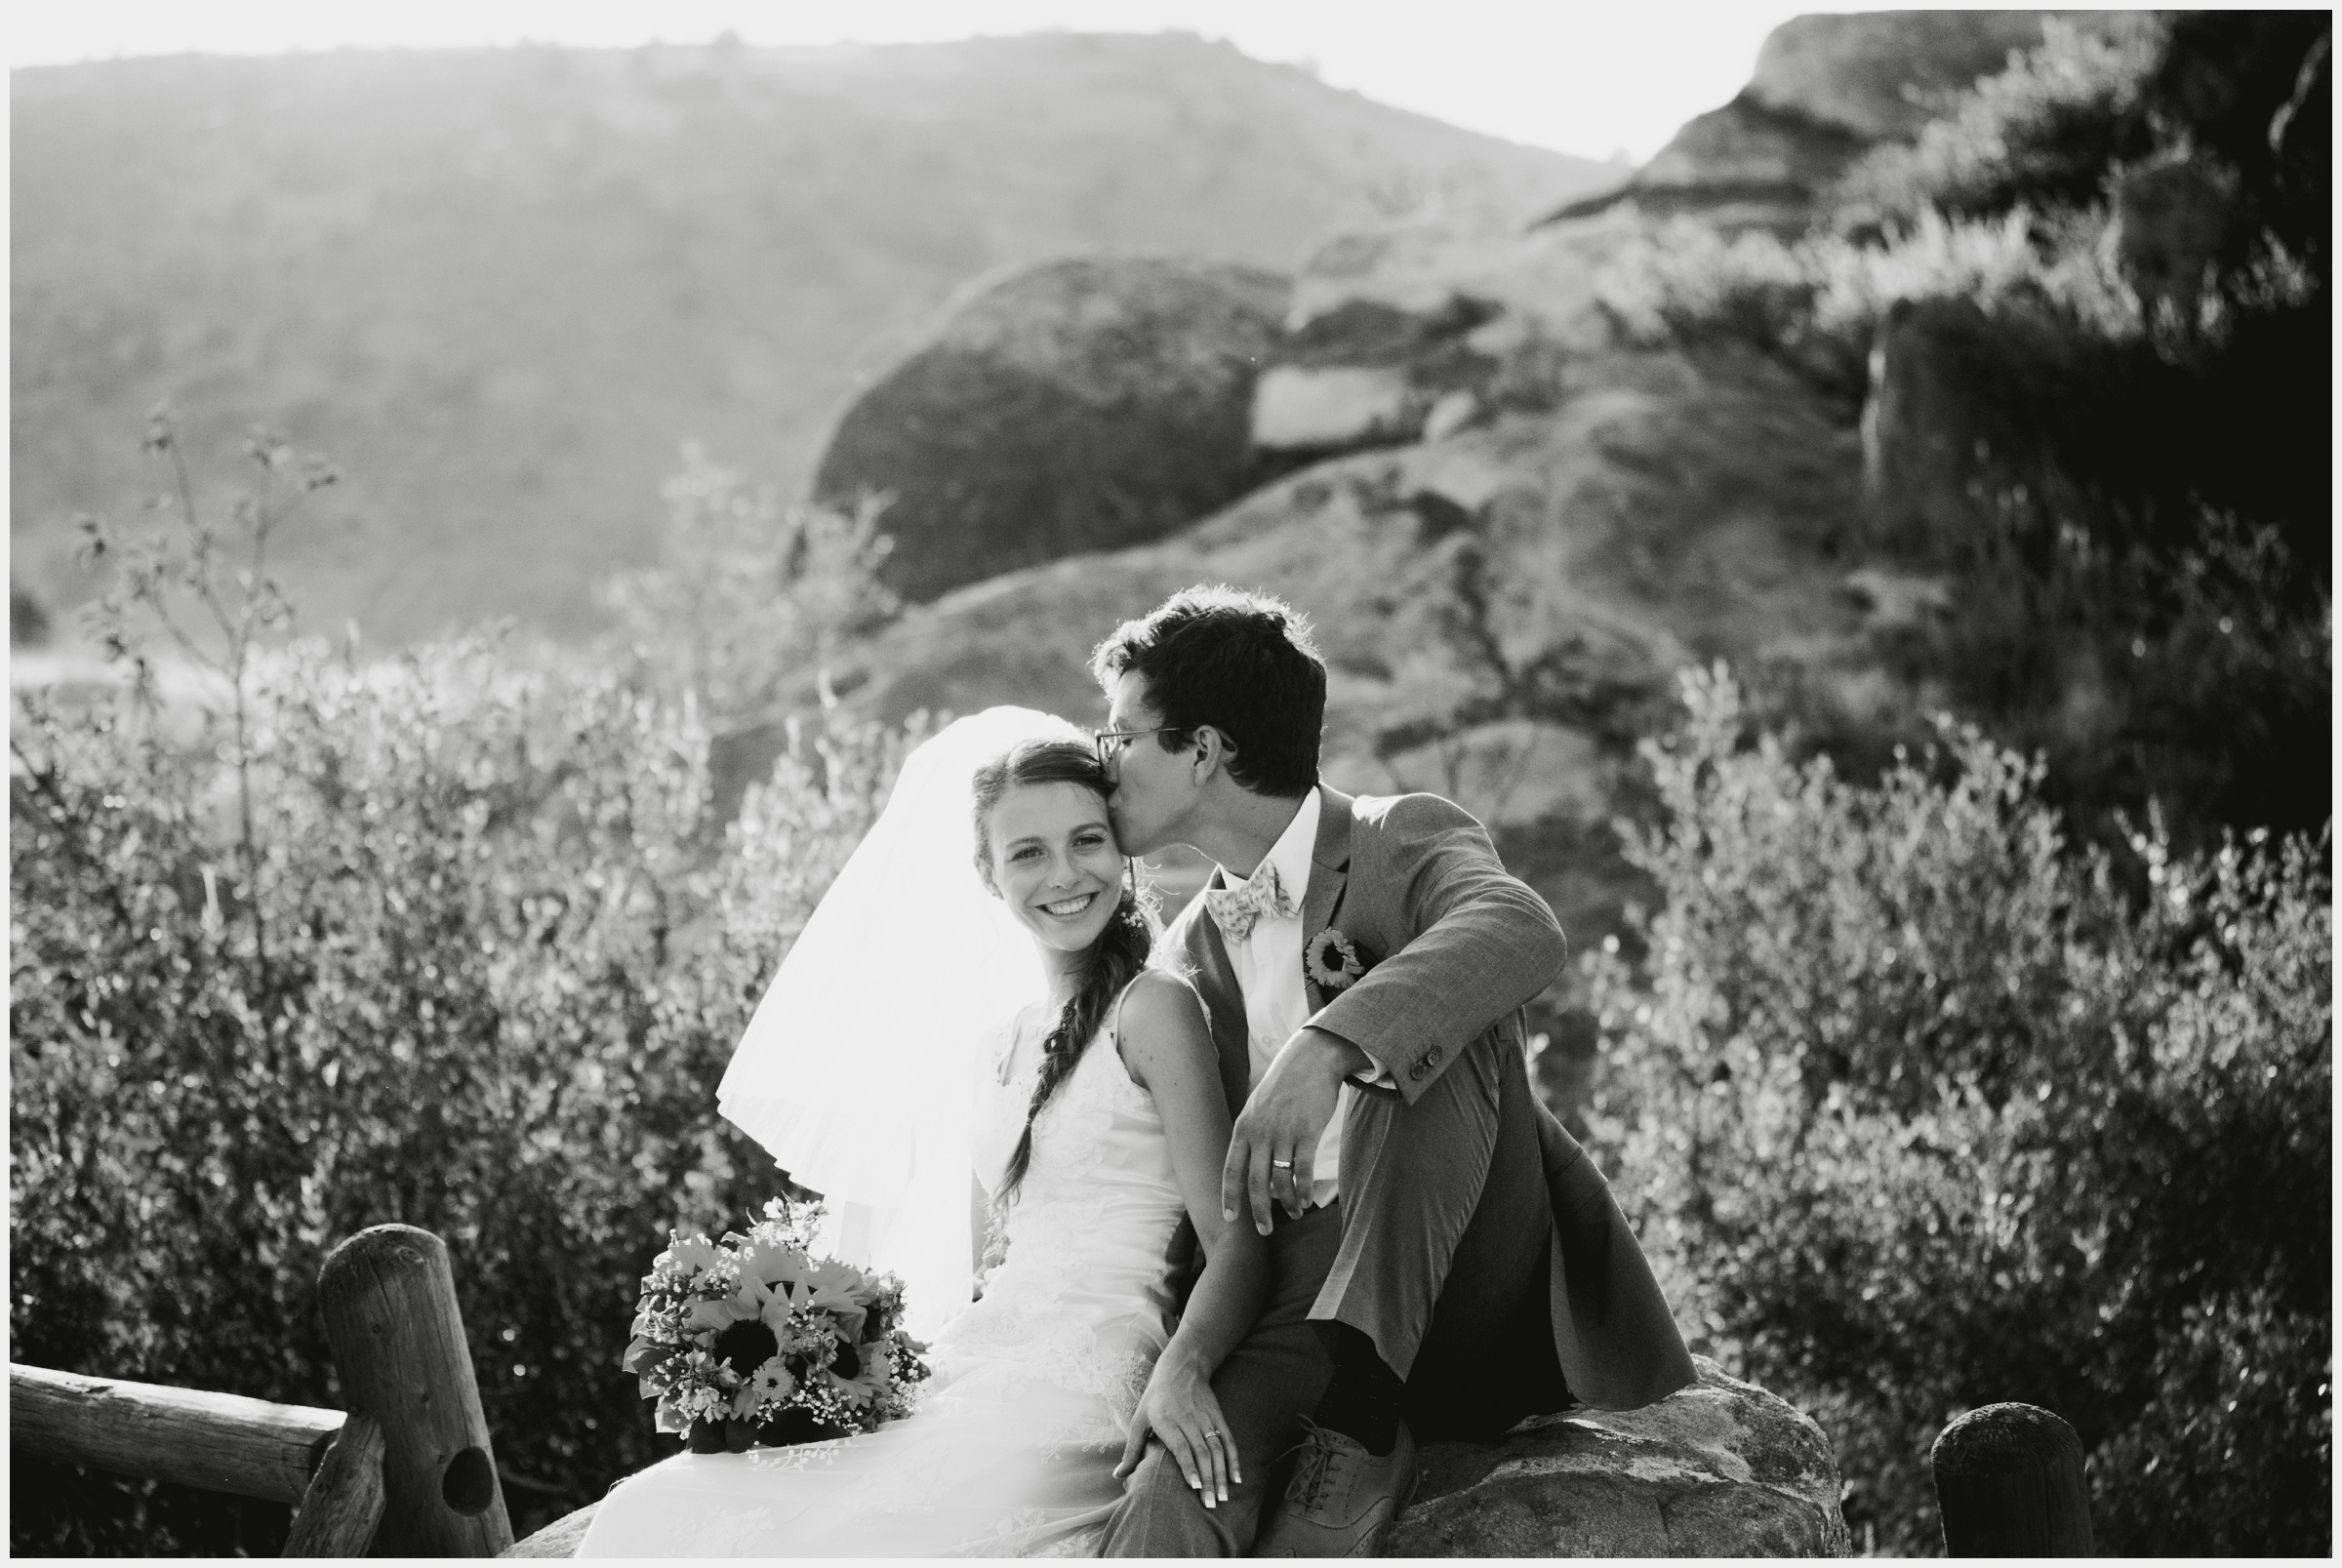 Red Rocks Park wedding portraits by Colorado photographer Plum Pretty Photography